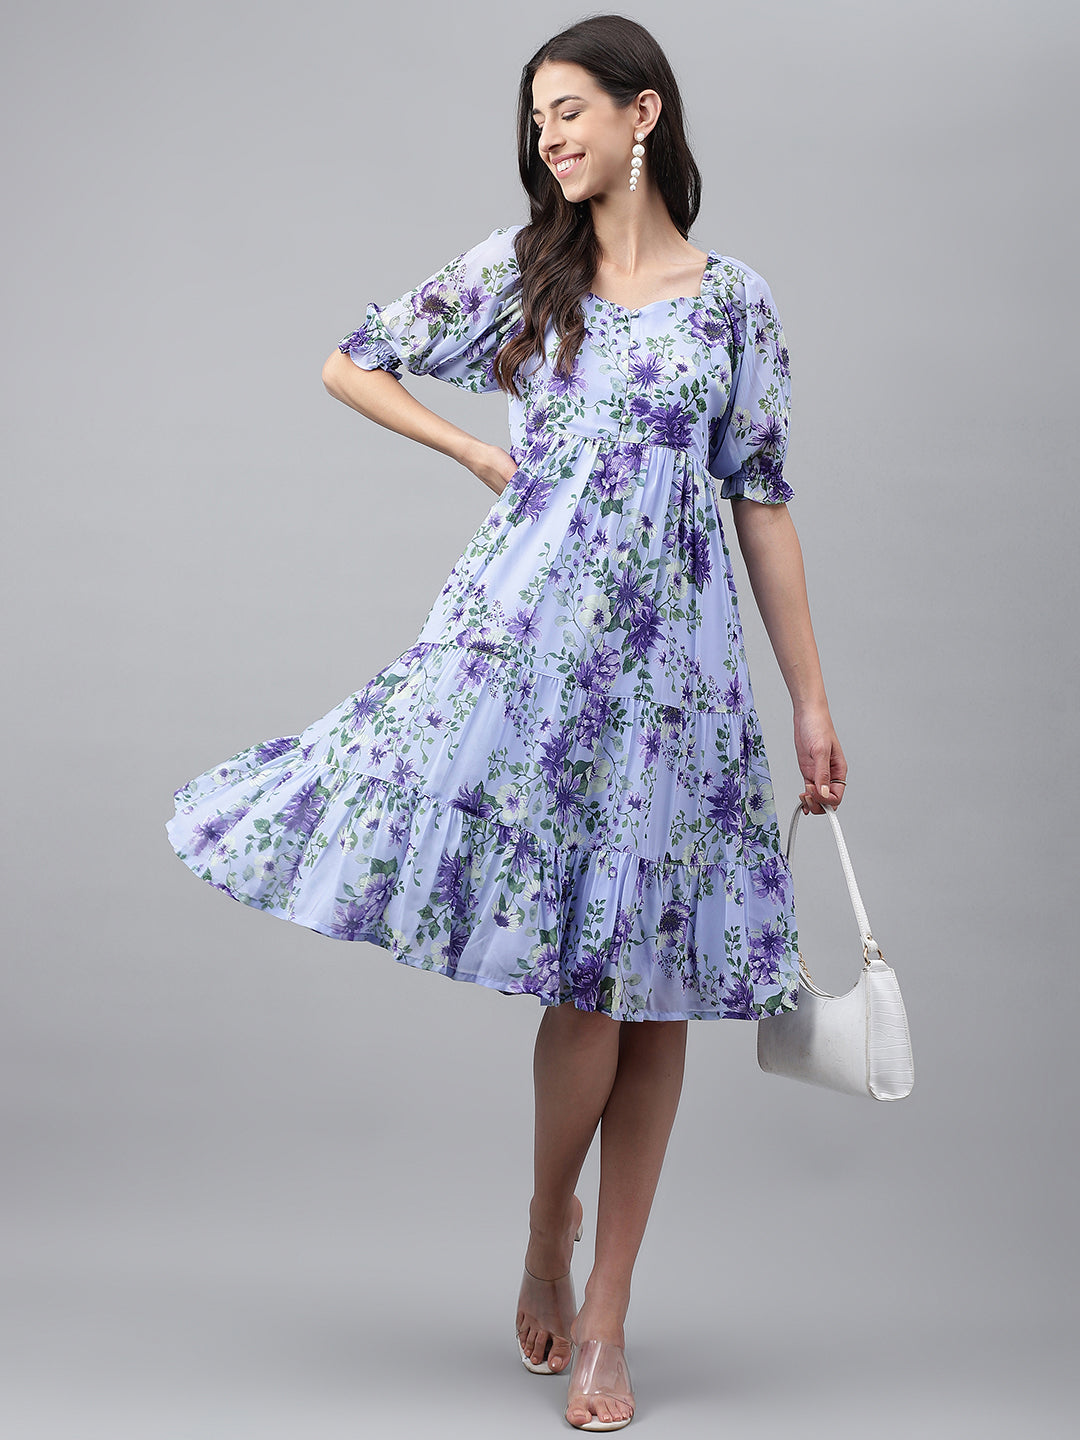 16+ Chic Dresses For Women | Fashion, Womens maxi dresses, Fashion dresses